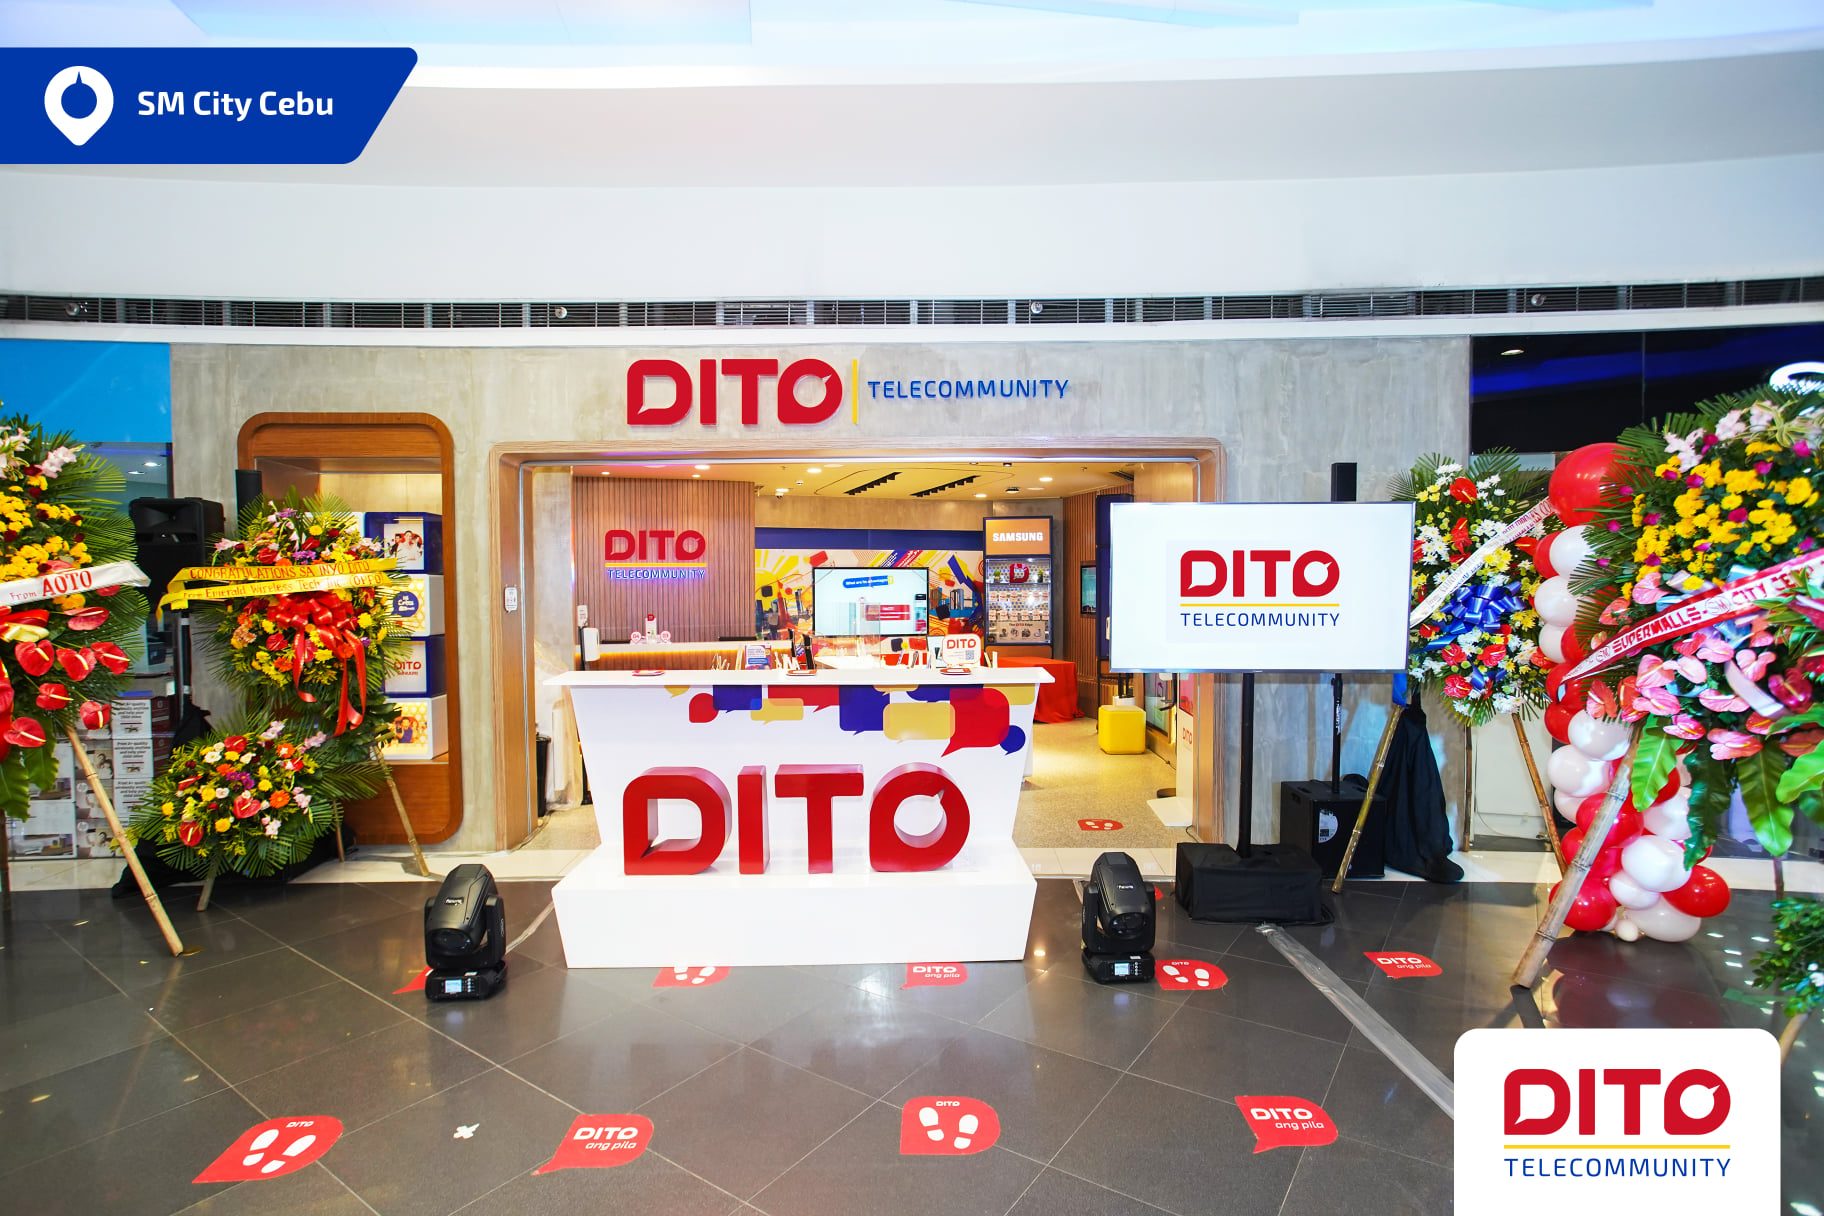 Dito Telecommunity reaches 2 million users